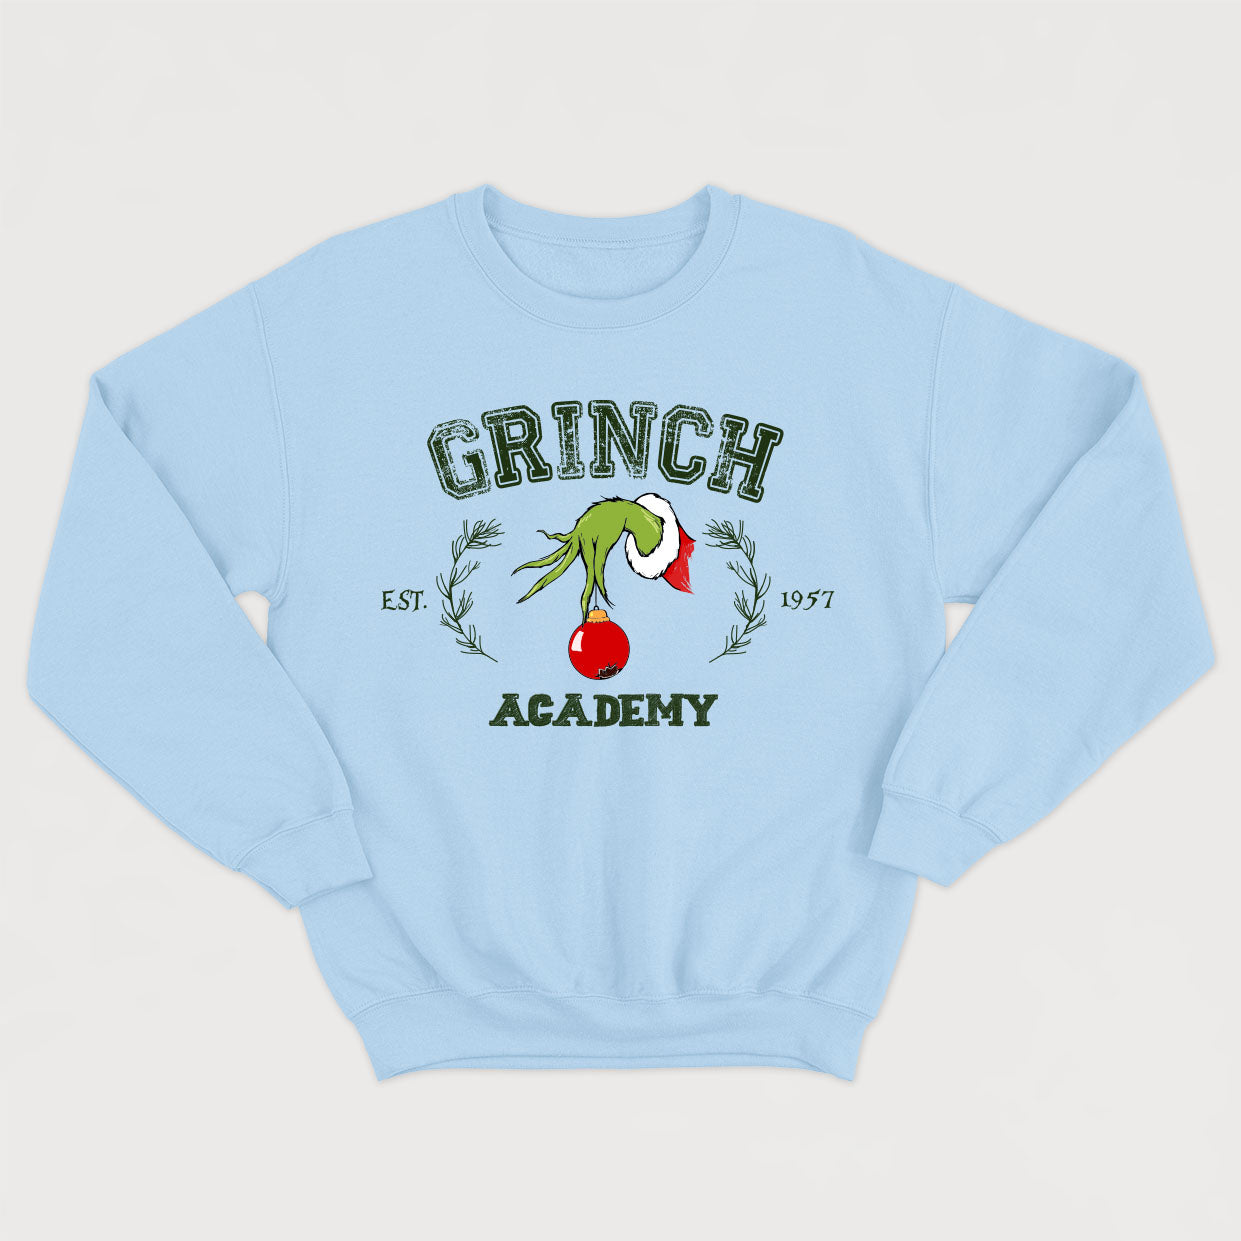 grinch-academy-crewneck-vintage-chrtismas